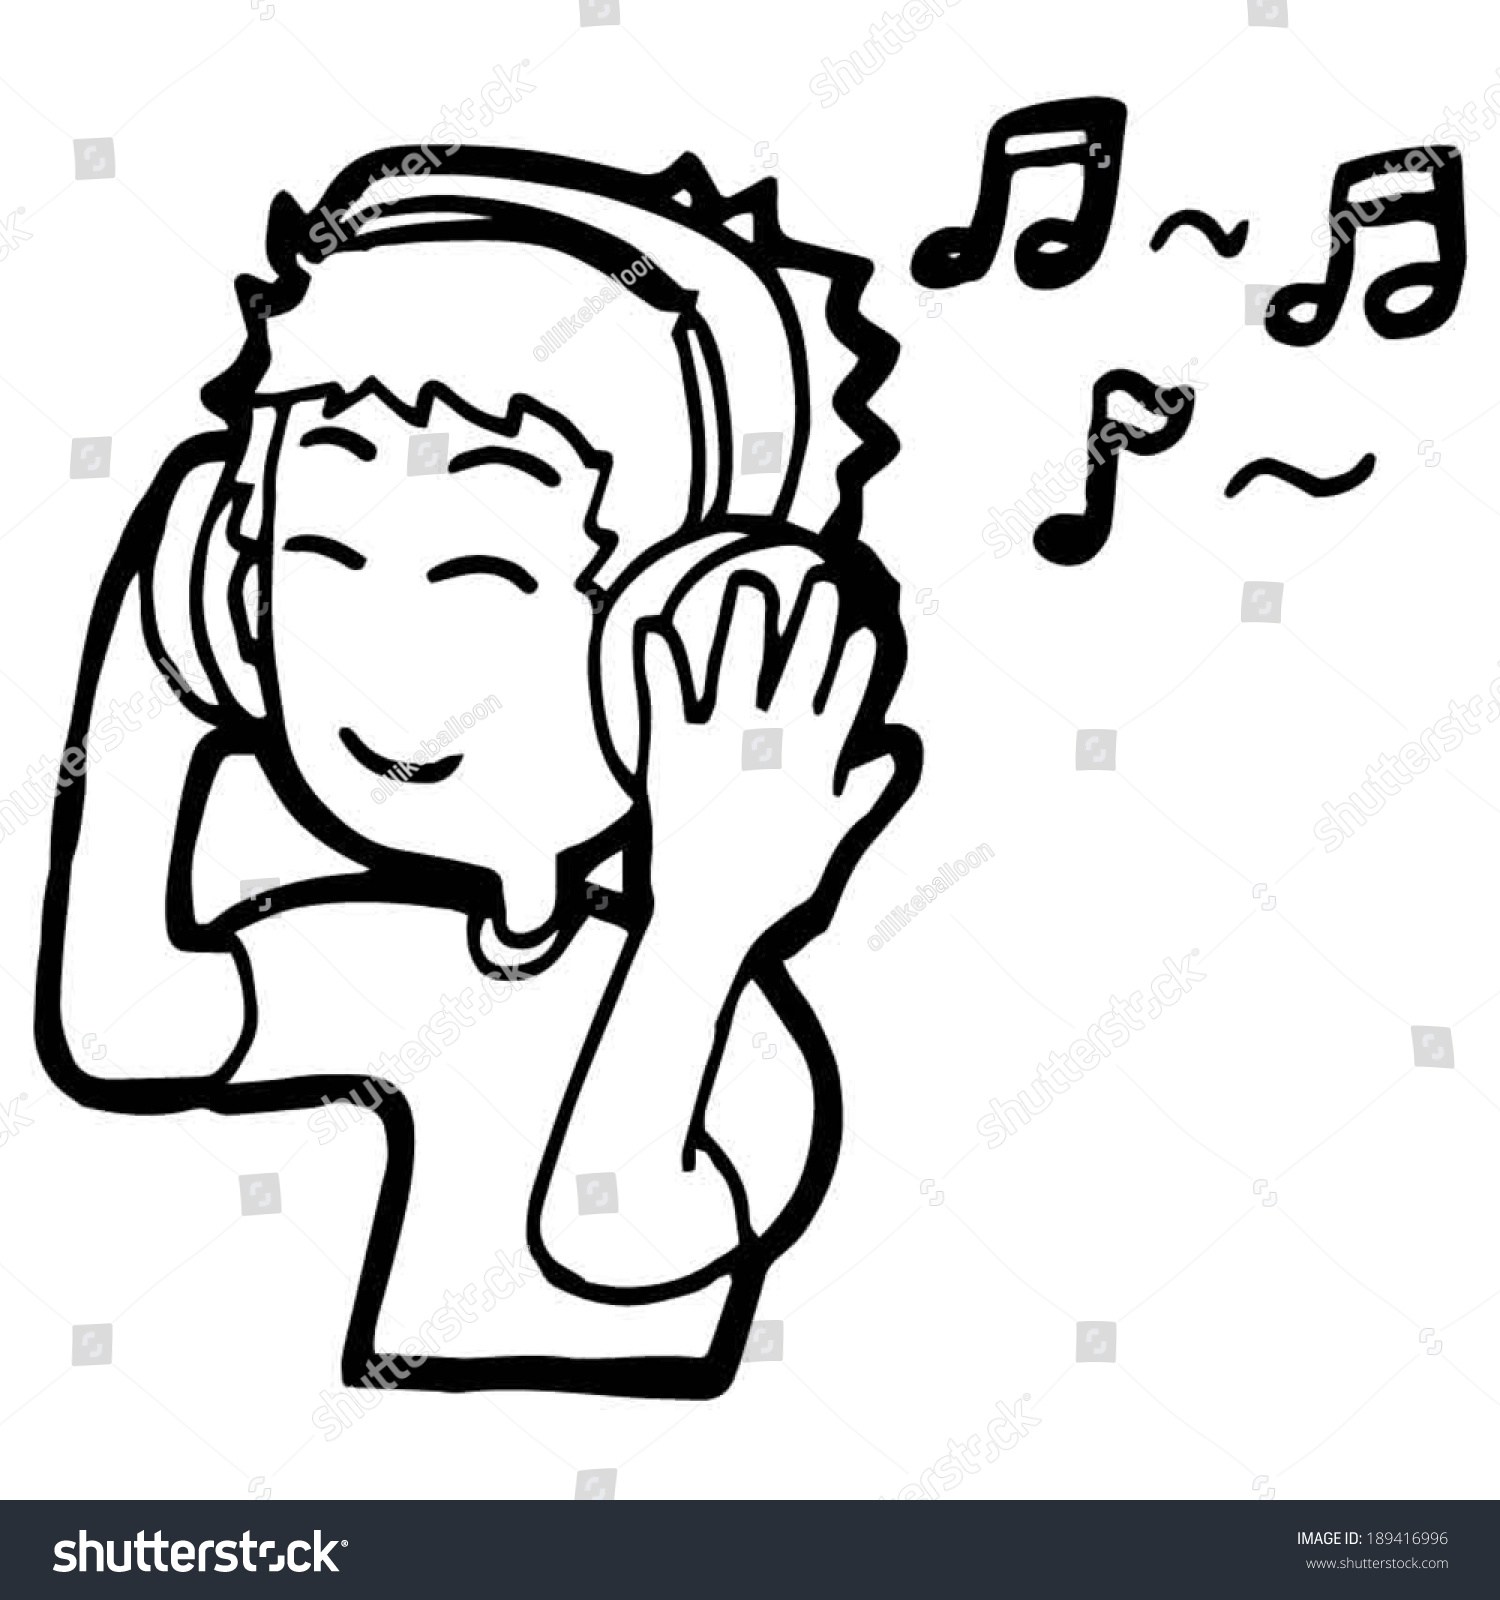 Listen to Music раскраска